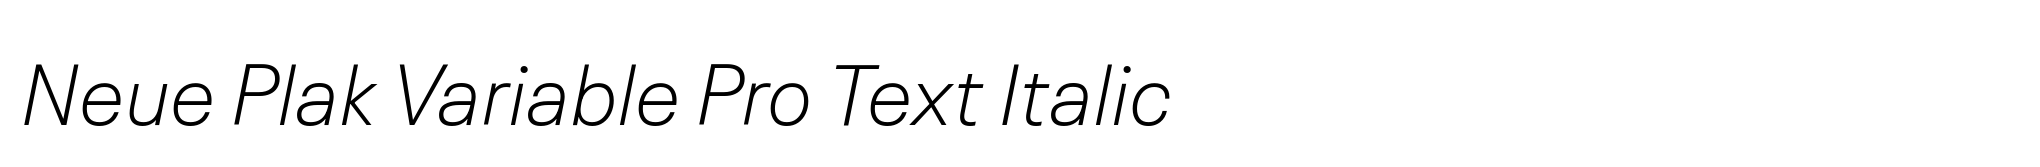 Neue Plak Variable Pro Text Italic image